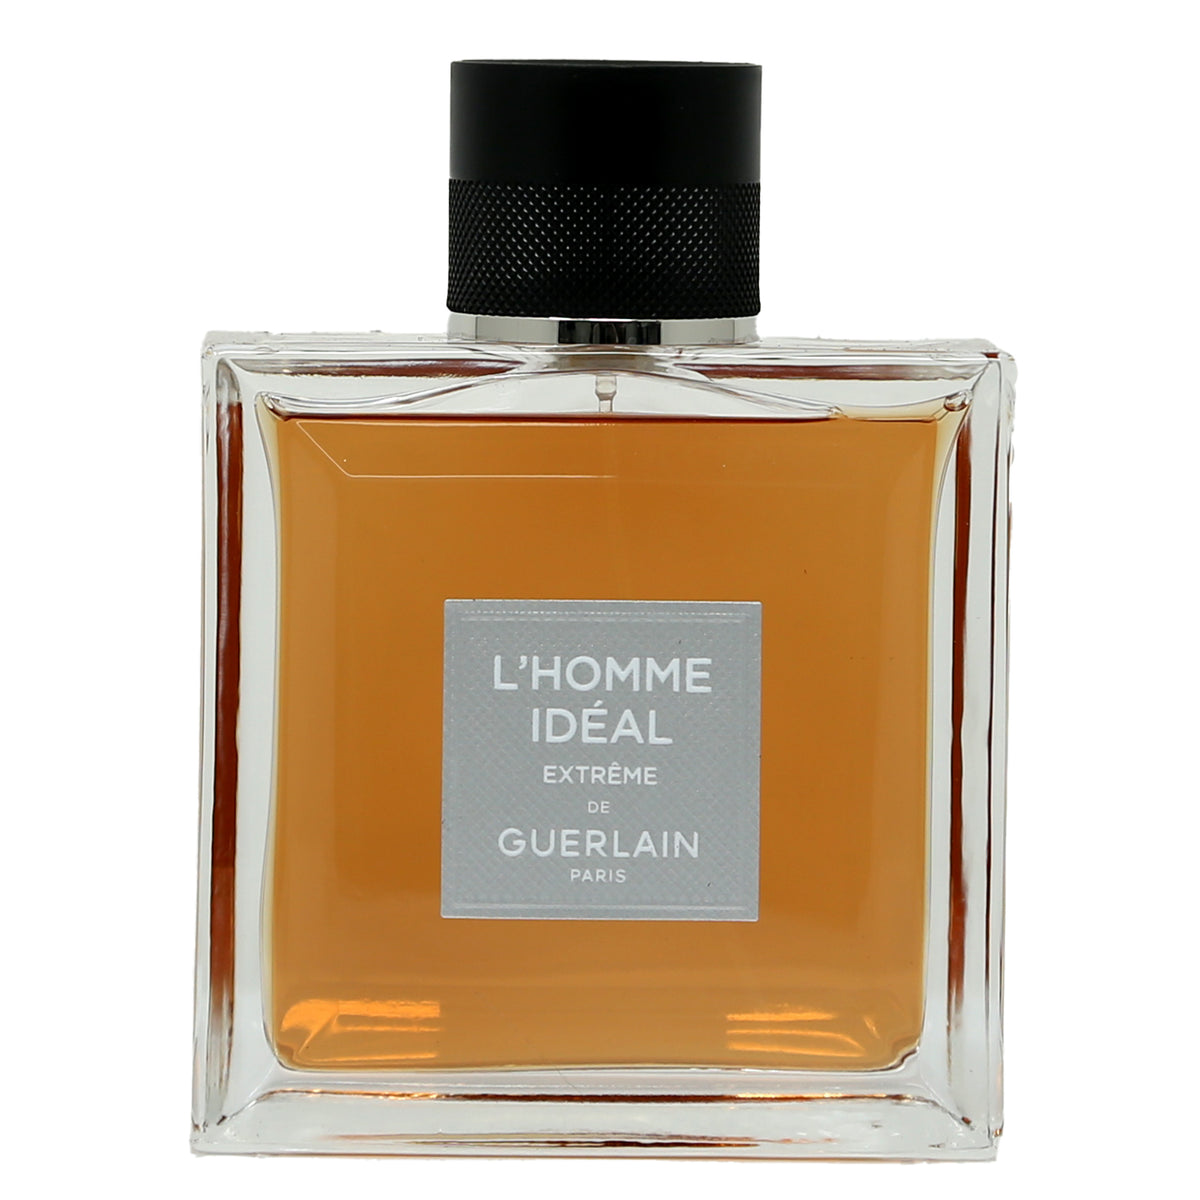 Guerlain L'Homme Ideal Extreme, Fragrance Sample